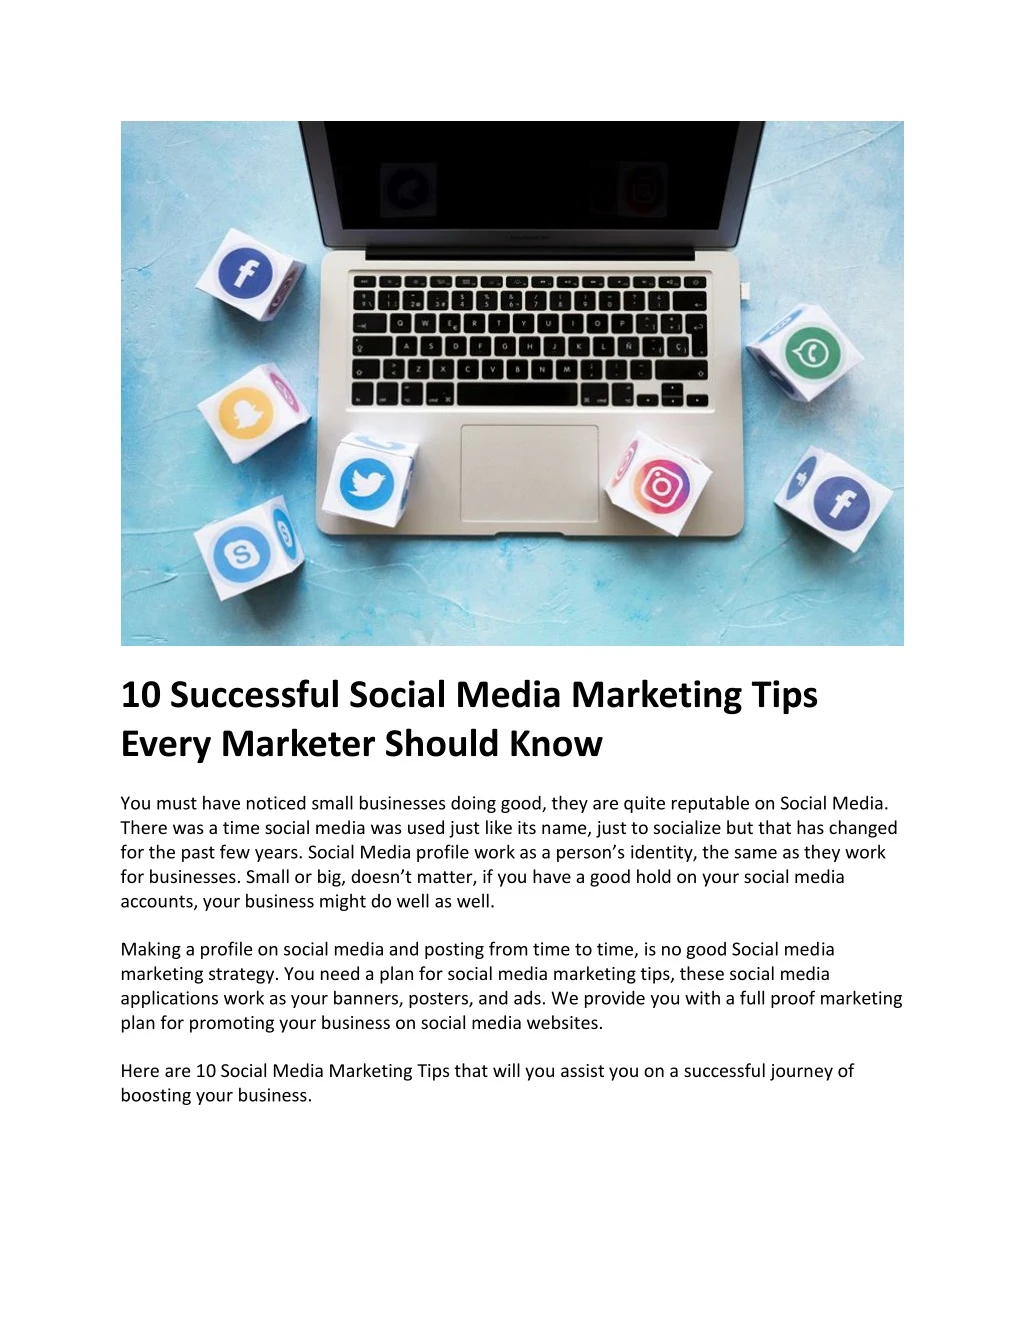 10 successful social media marketing tips every